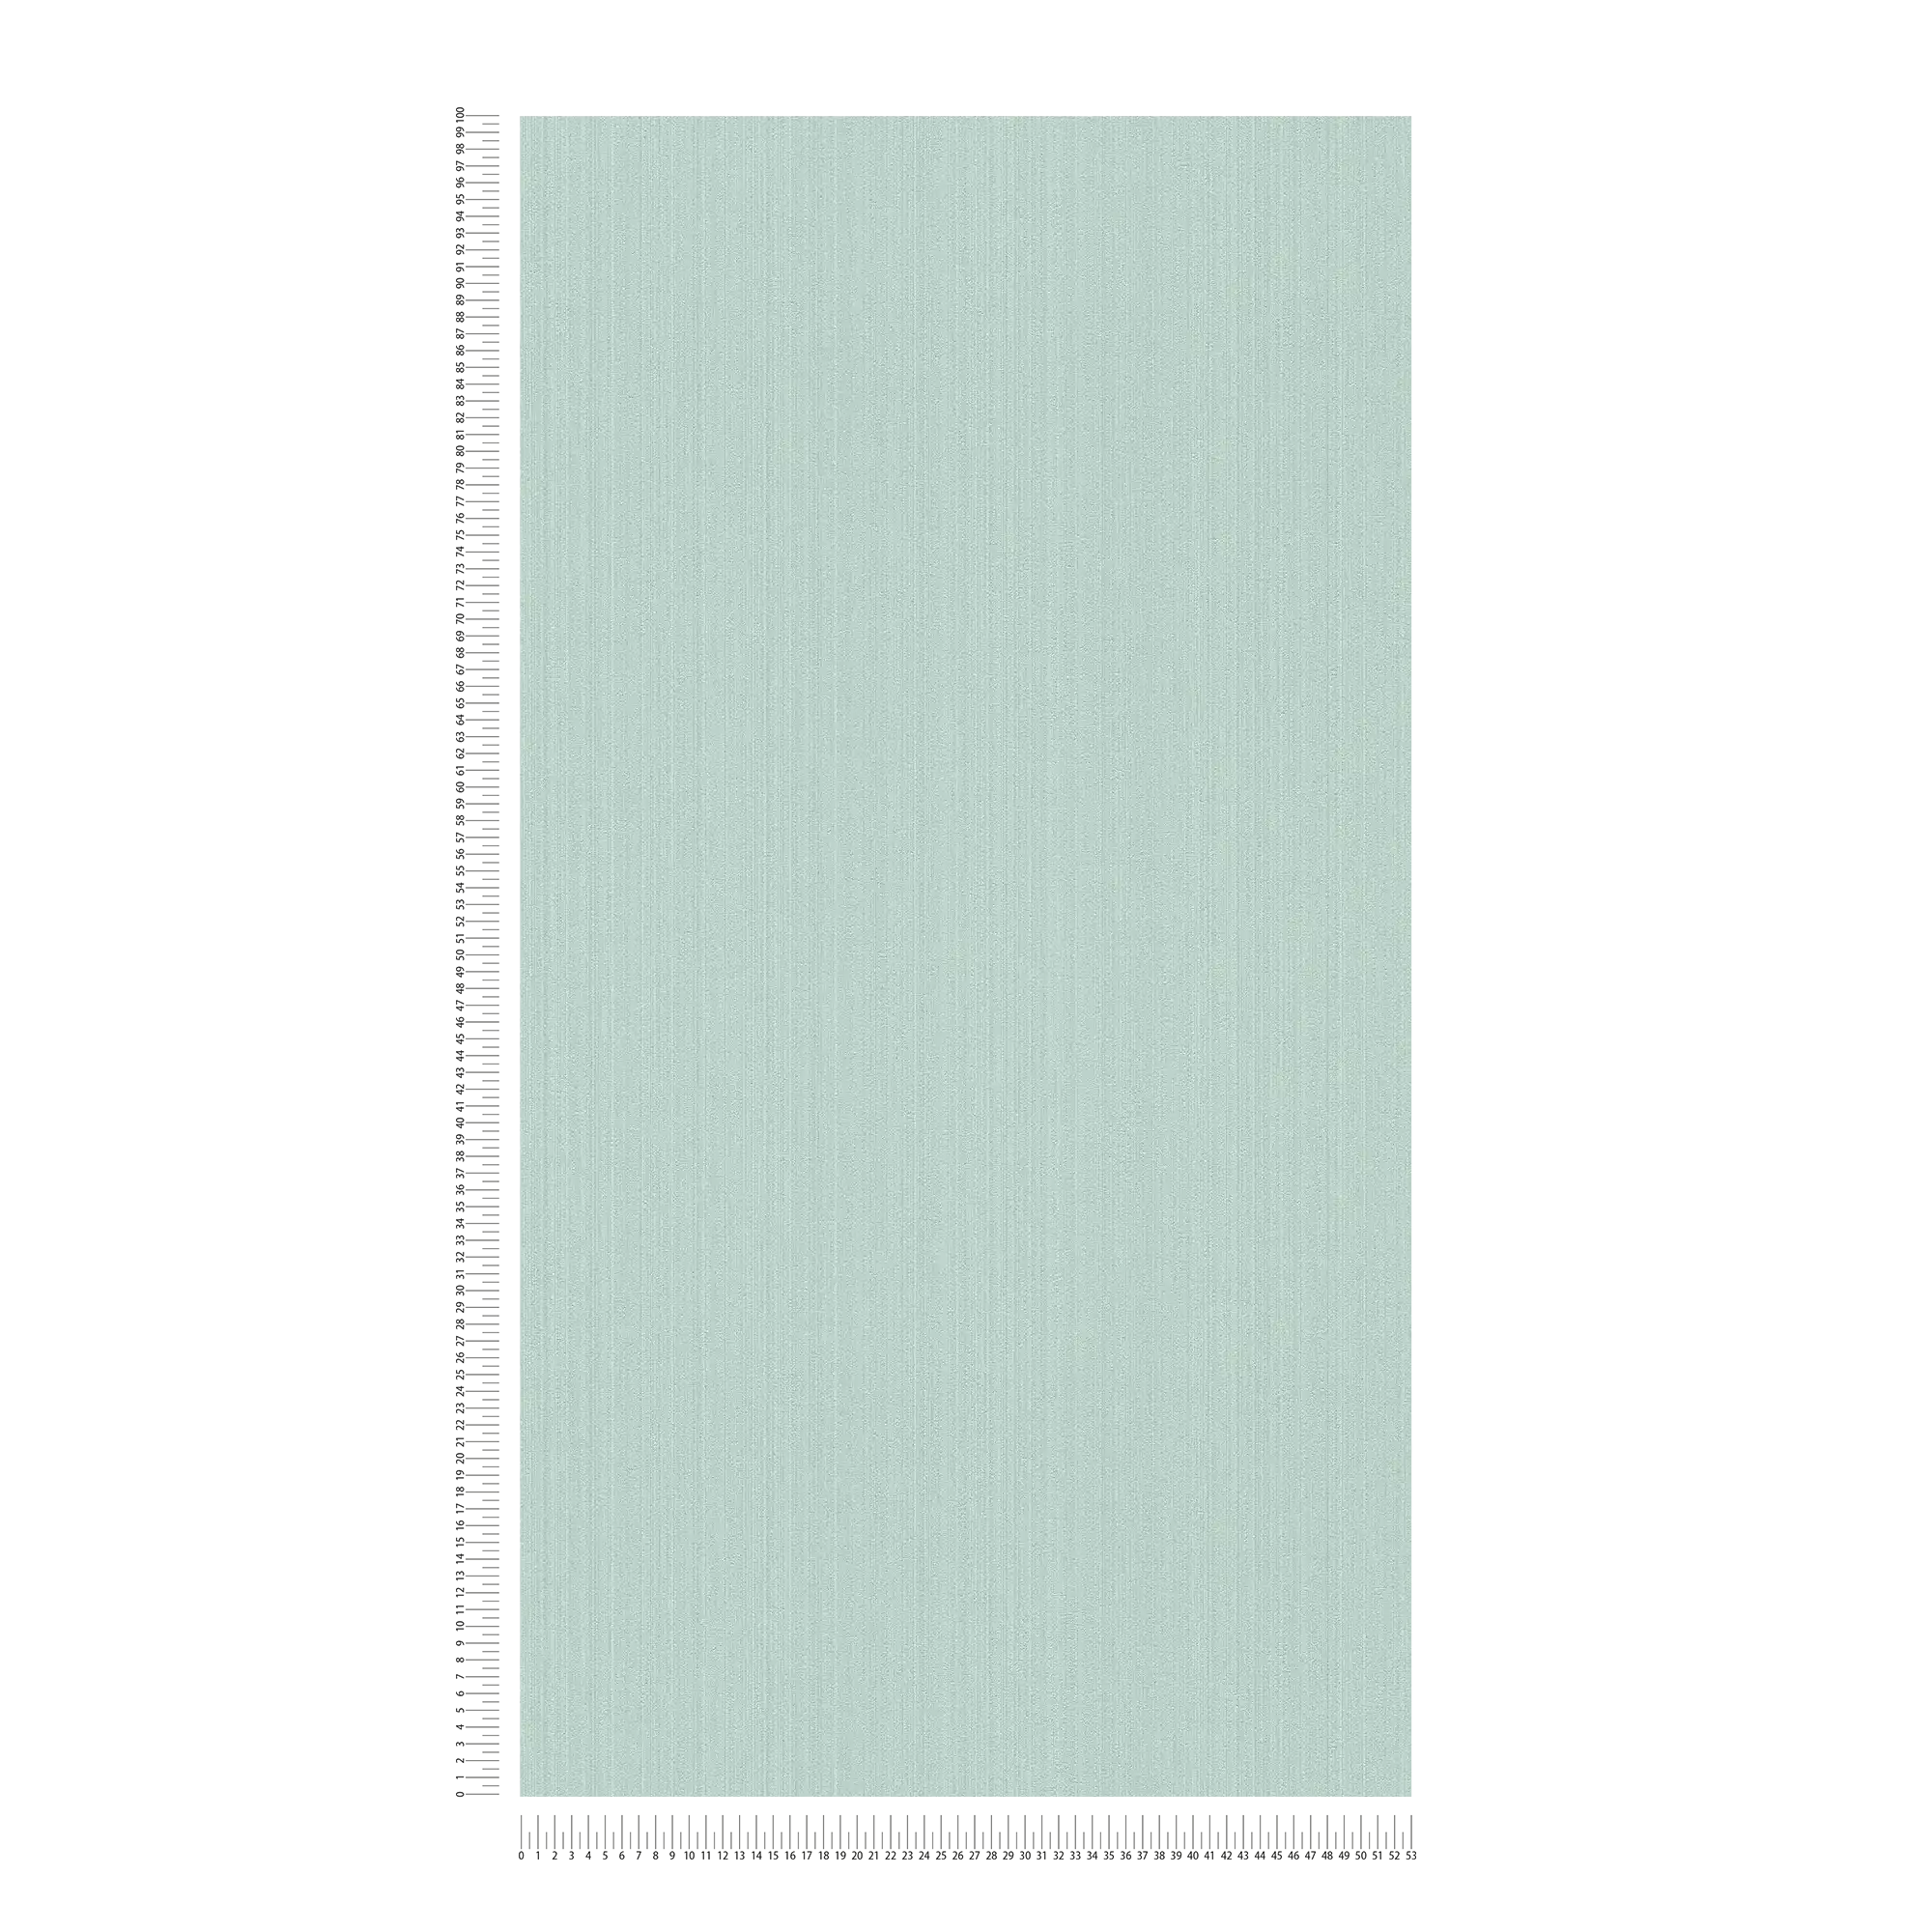             Carta da parati tinta unita verde menta, seta opaca con motivo a struttura
        